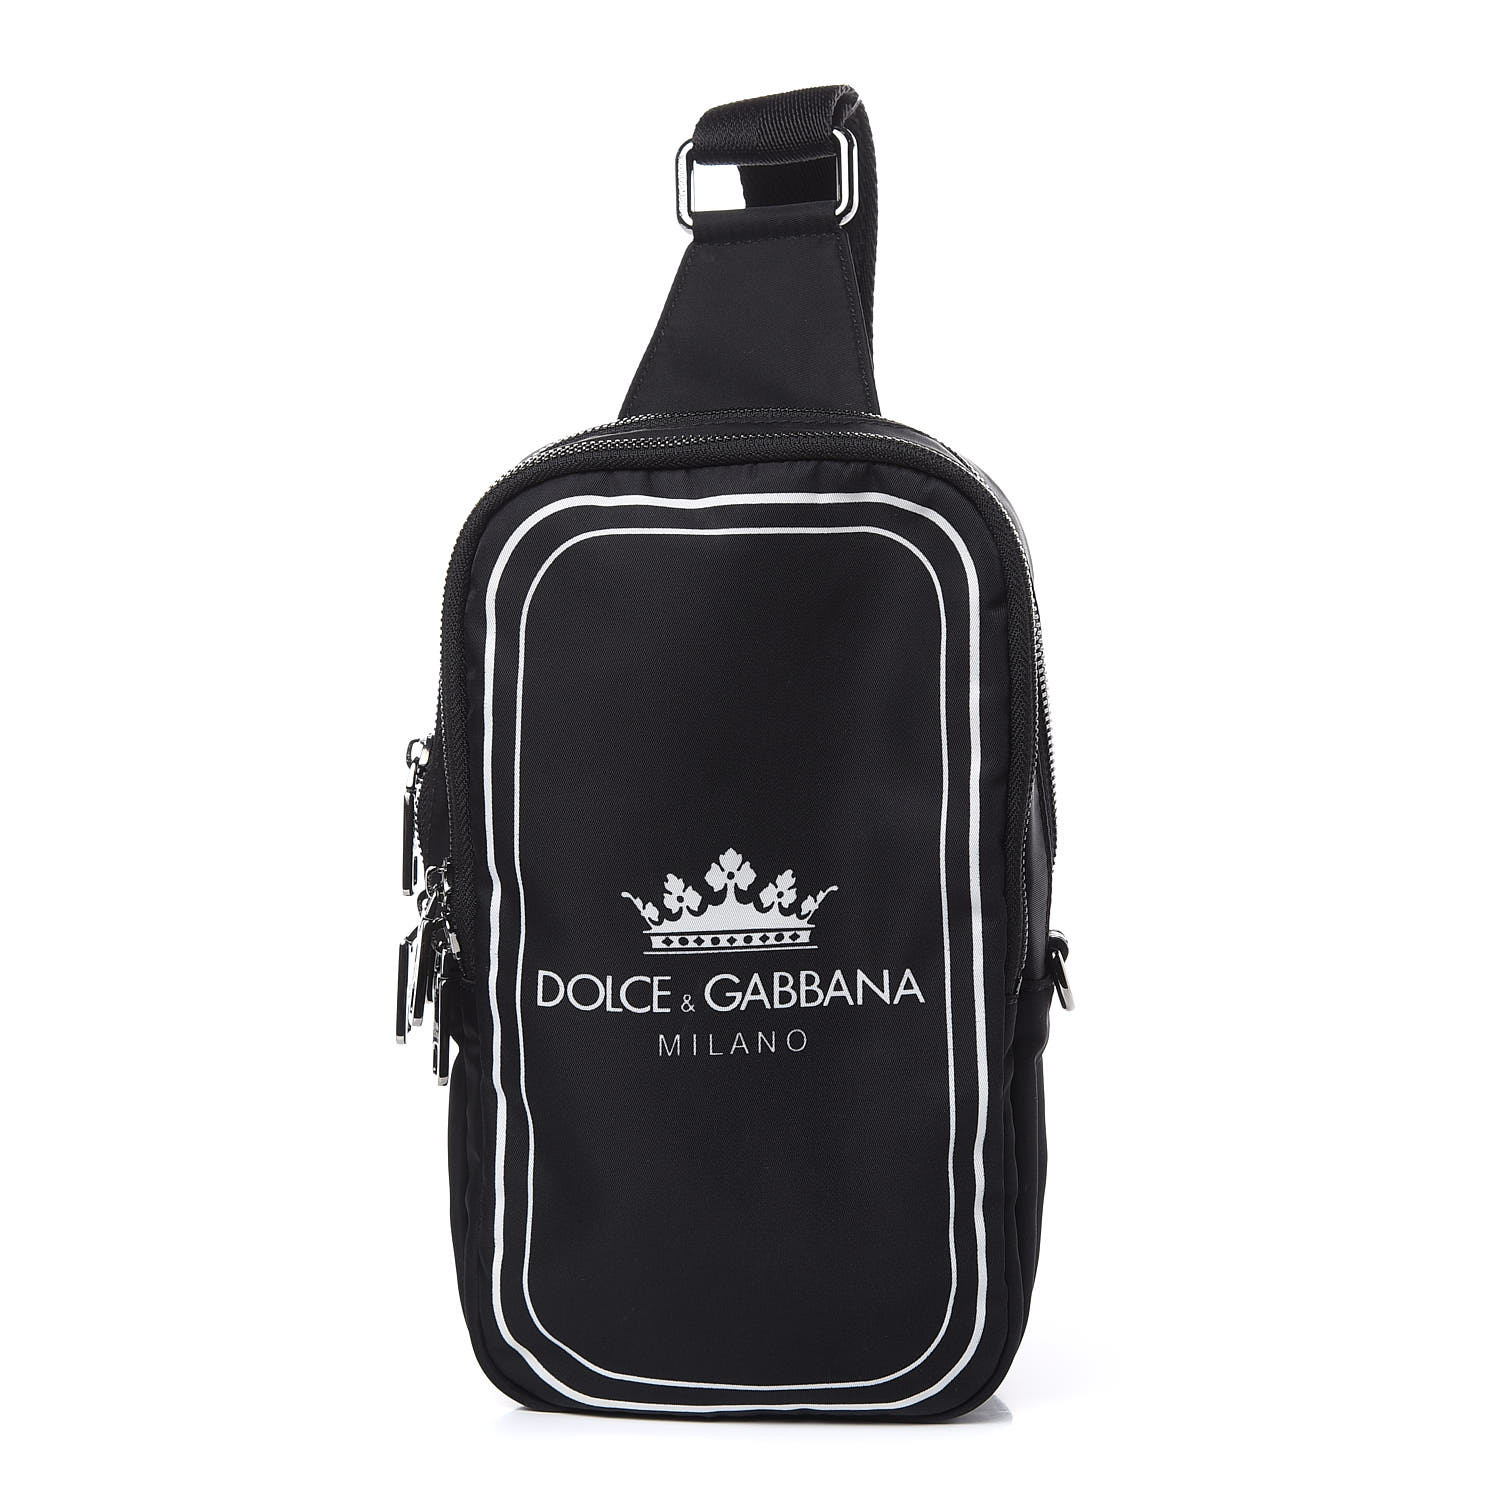 dolce and gabbana sling bag